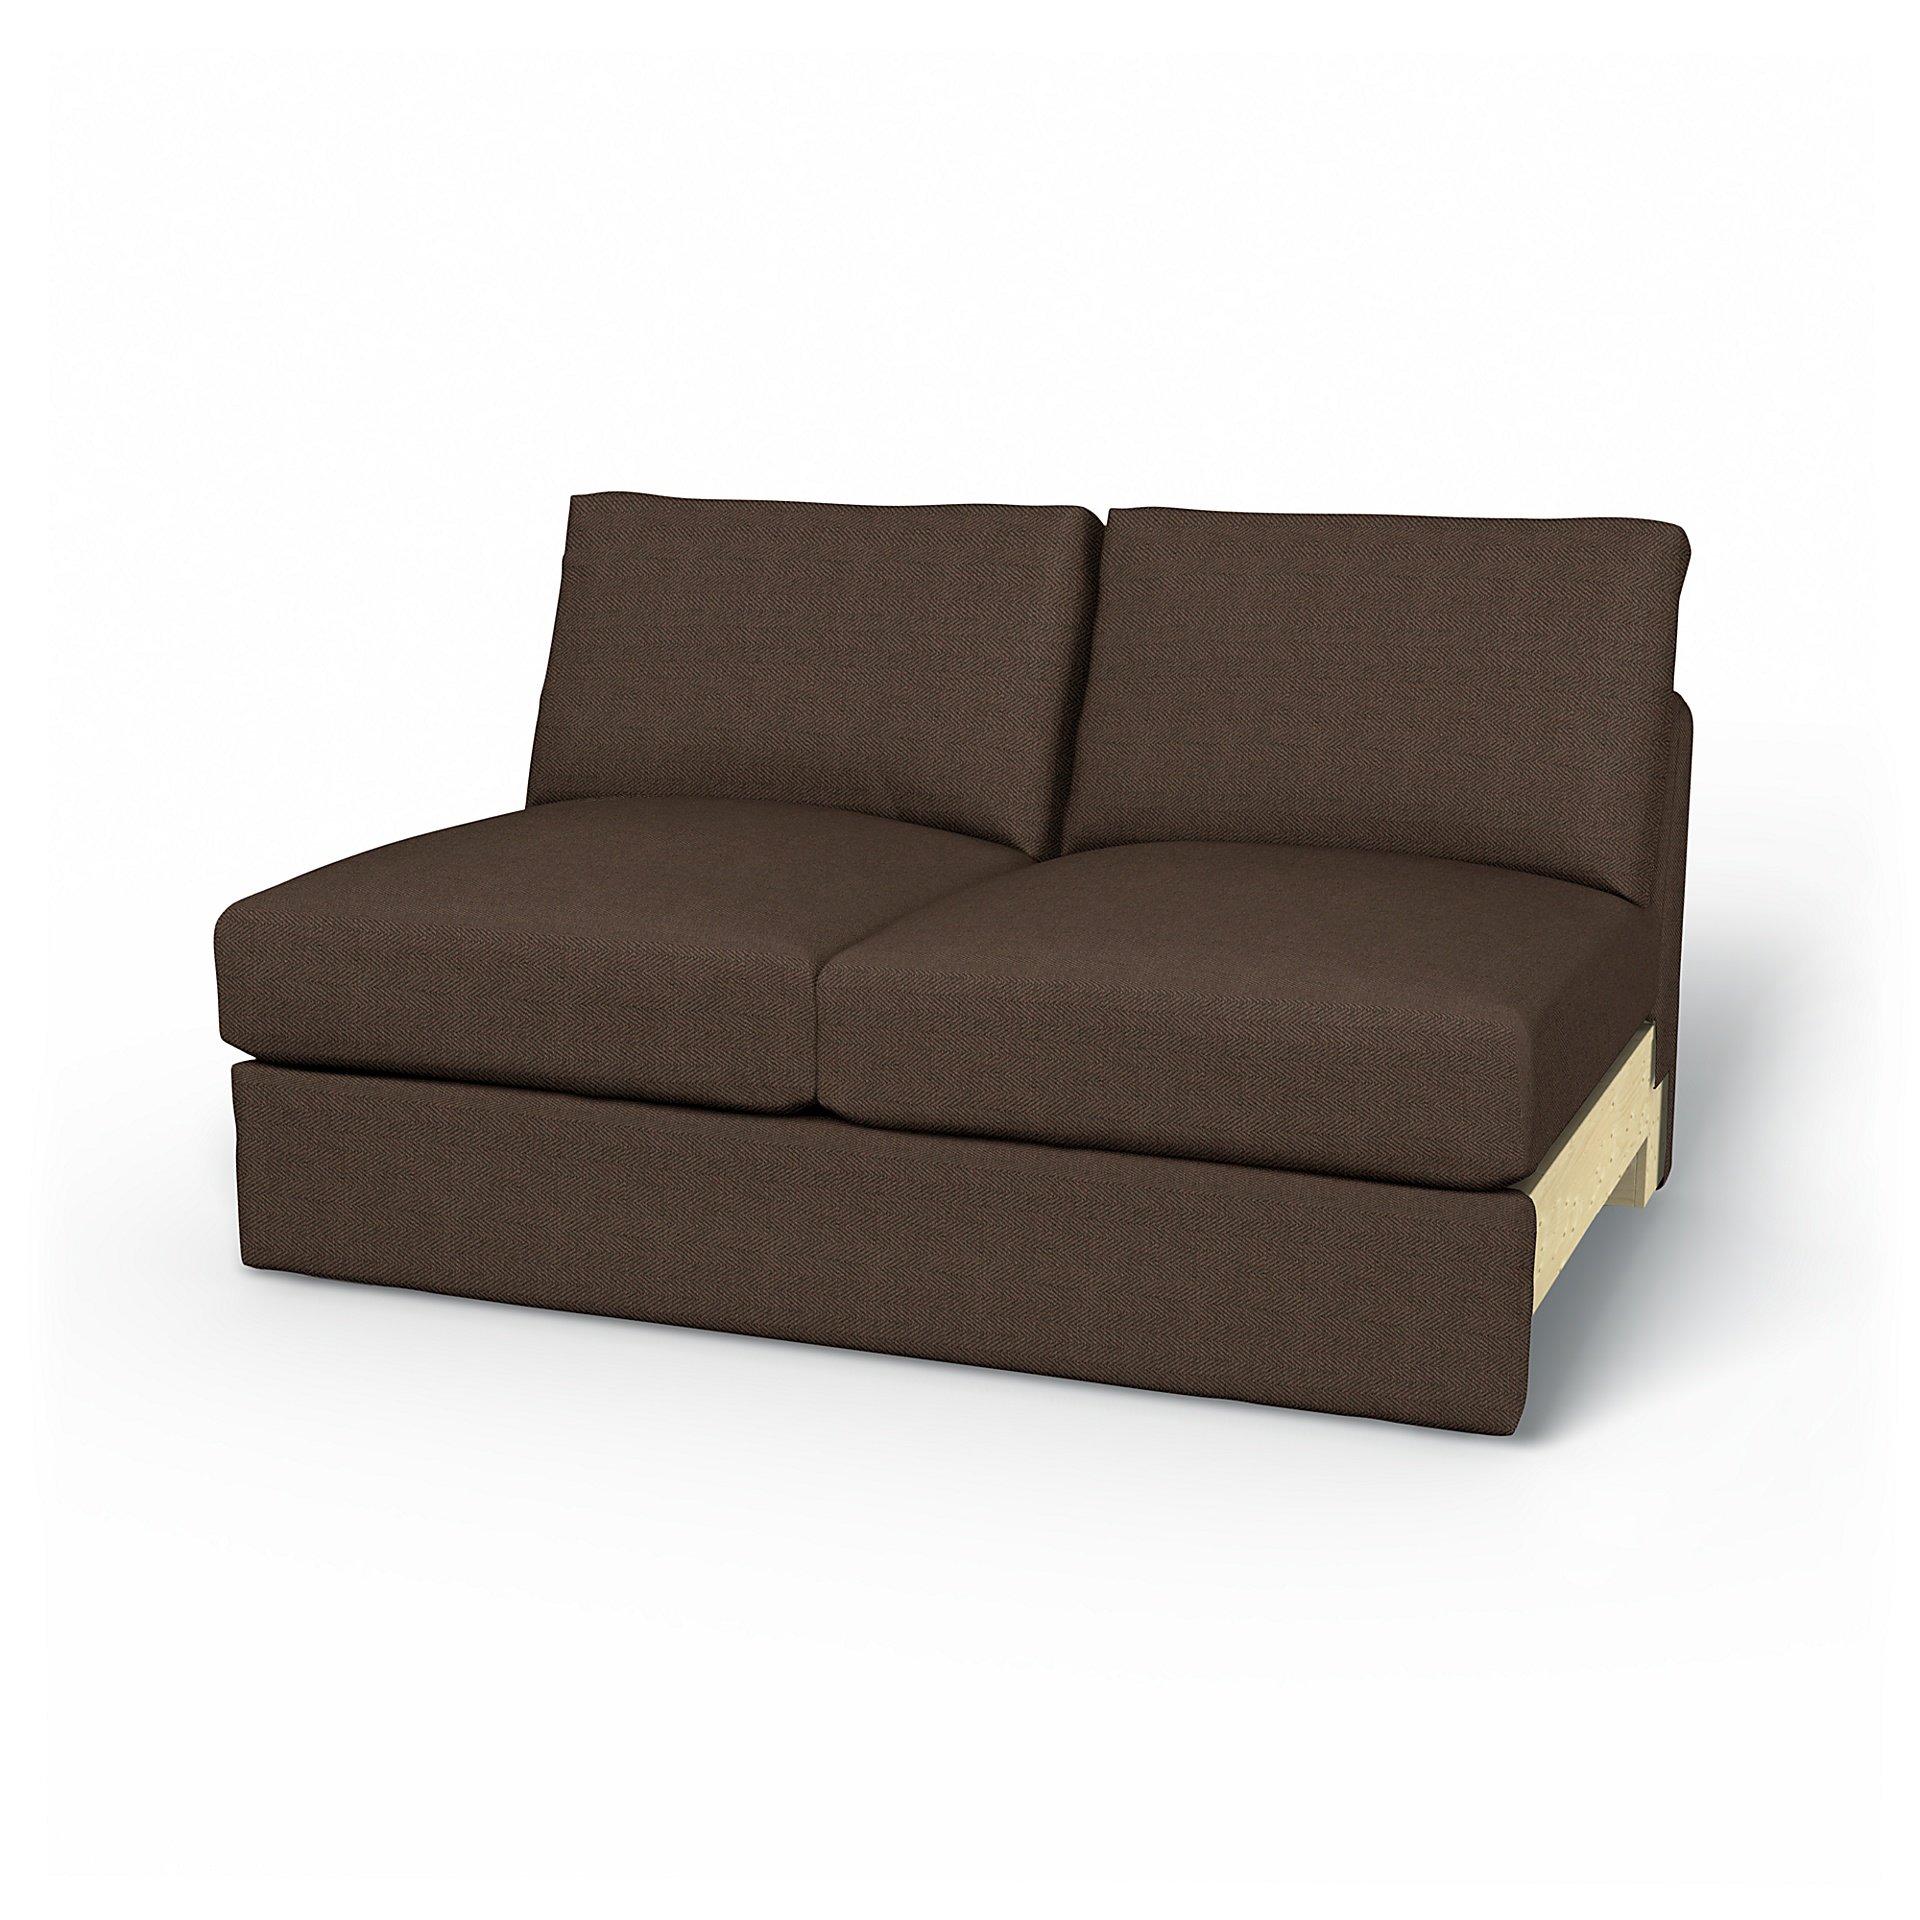 IKEA - Vimle 2 seater bed sofa without armrests, Chocolate, Boucle & Texture - Bemz